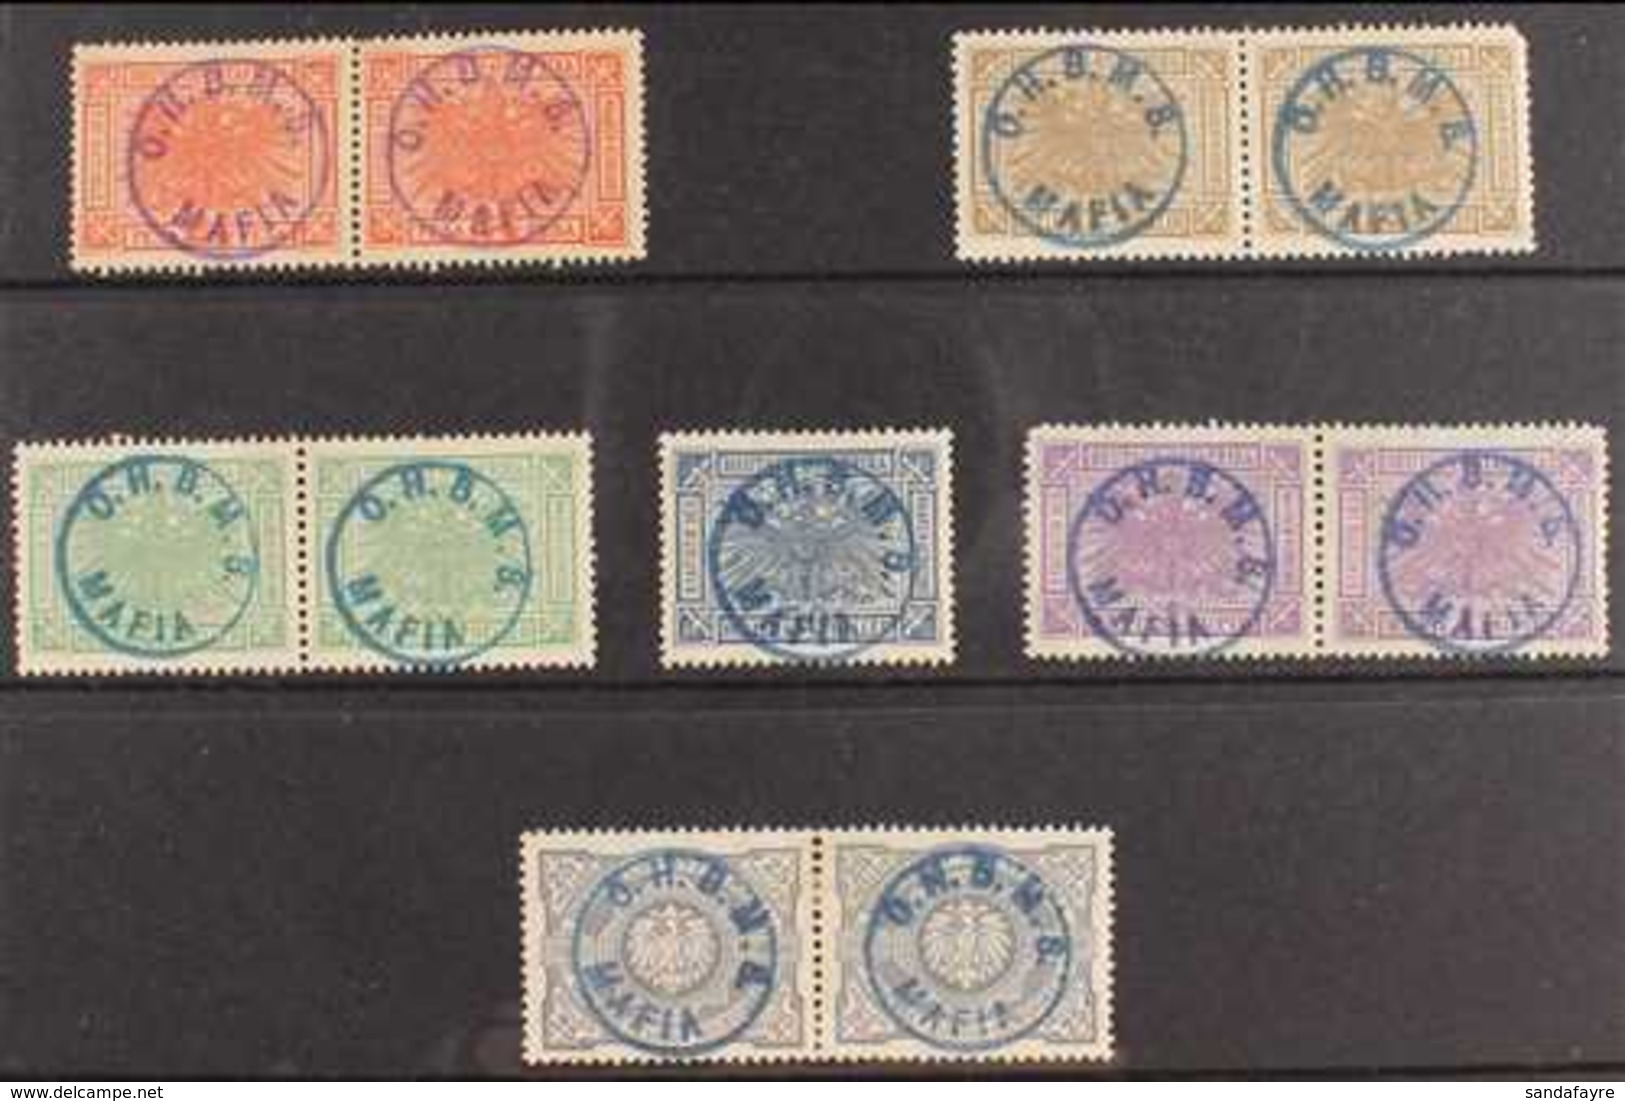 MAFIA ISLAND  1915 German East African Fiscal Stamps Handstamped "OHBMS MAFIA" In Circle, SG M21 - M26, In Mint Pairs (5 - Tanganyika (...-1932)